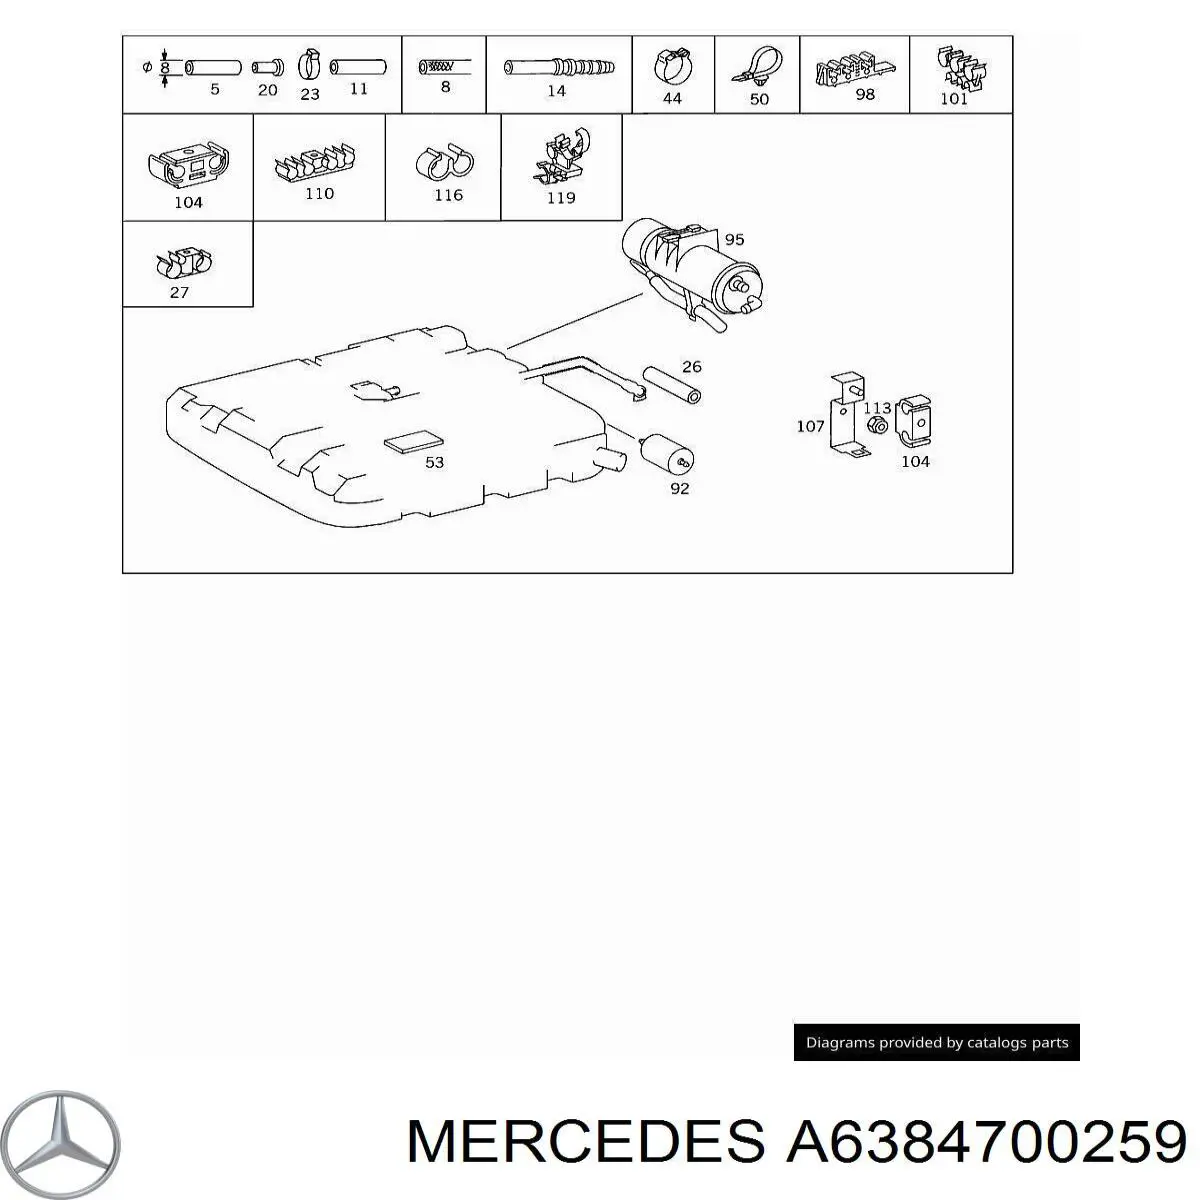 A6384700259 Mercedes